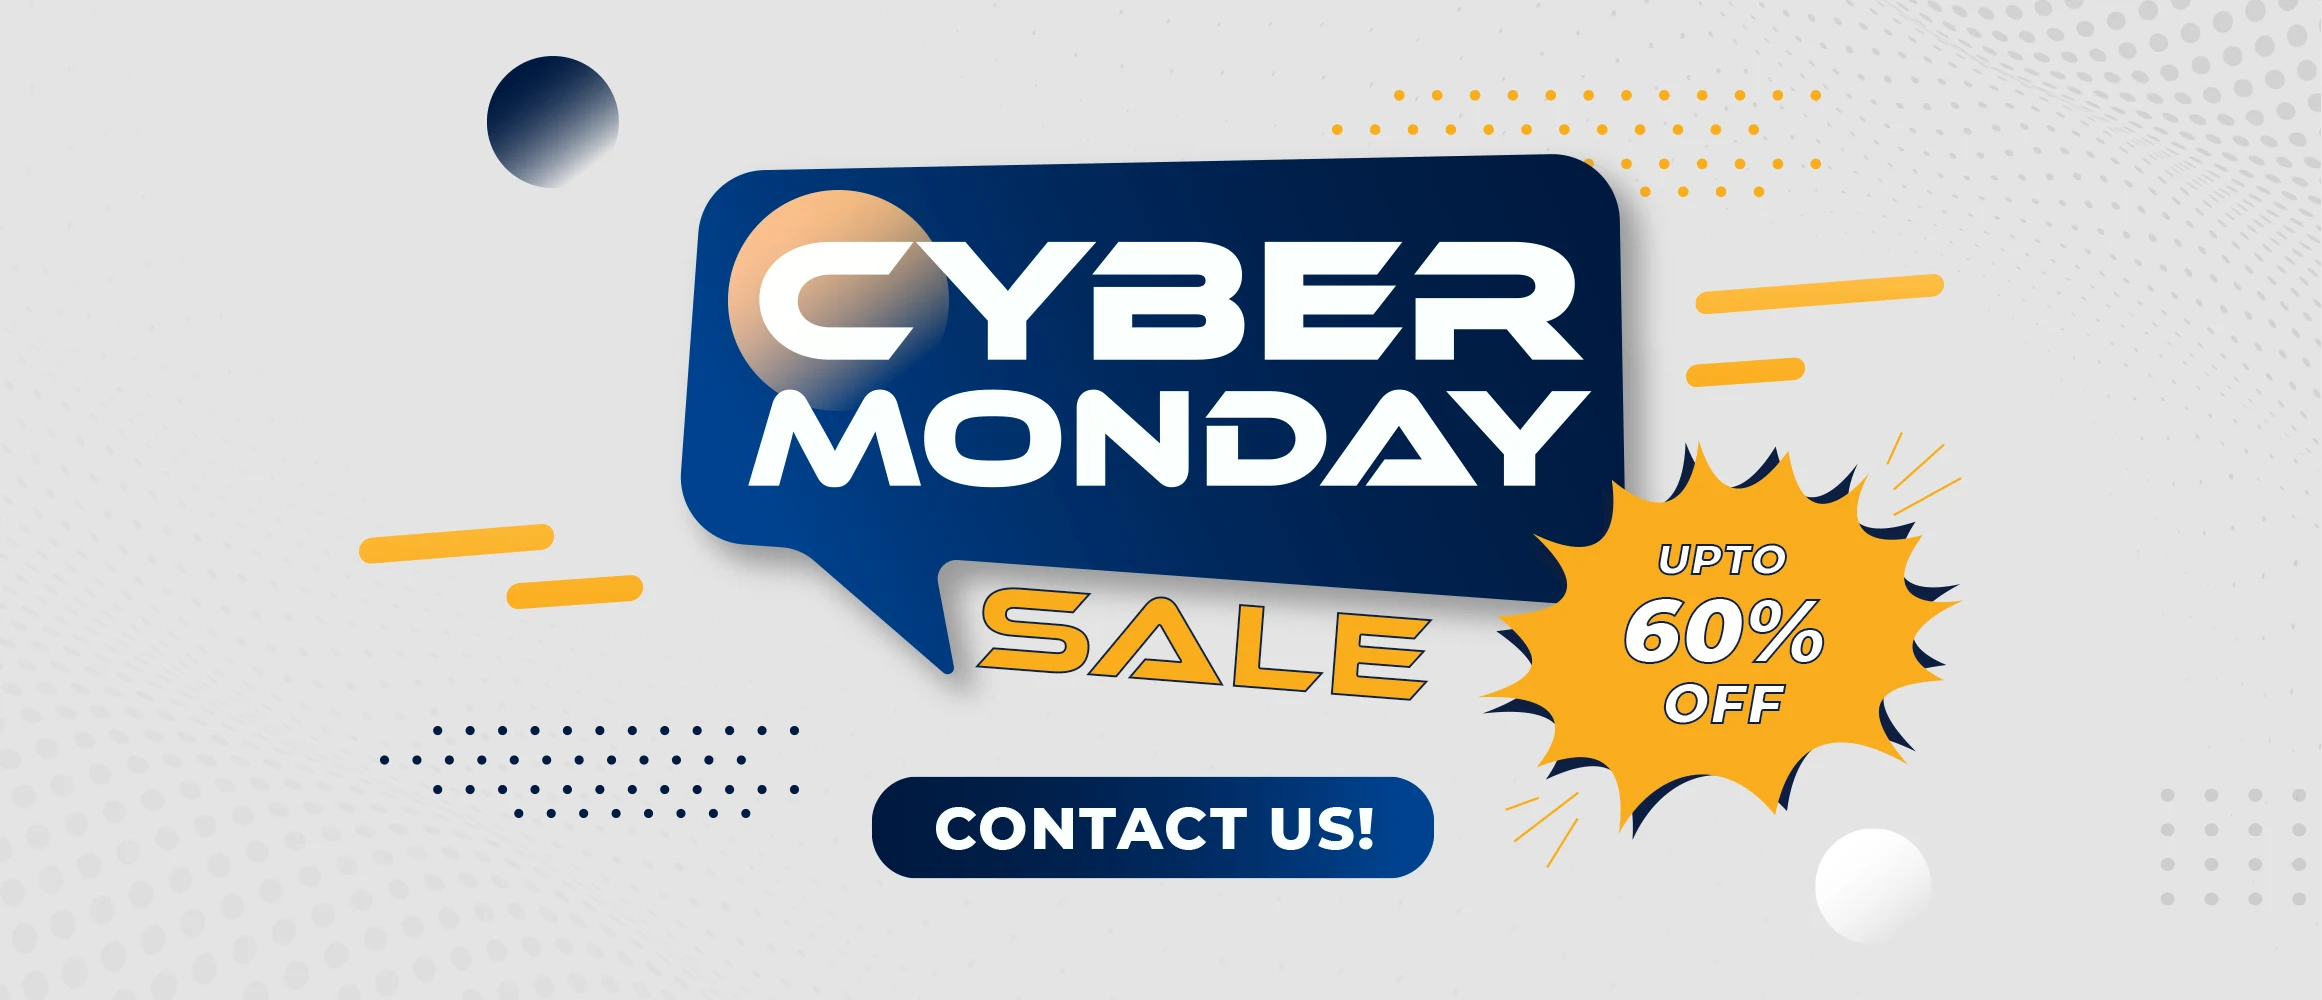 Cyber Monday Sales Blog Image